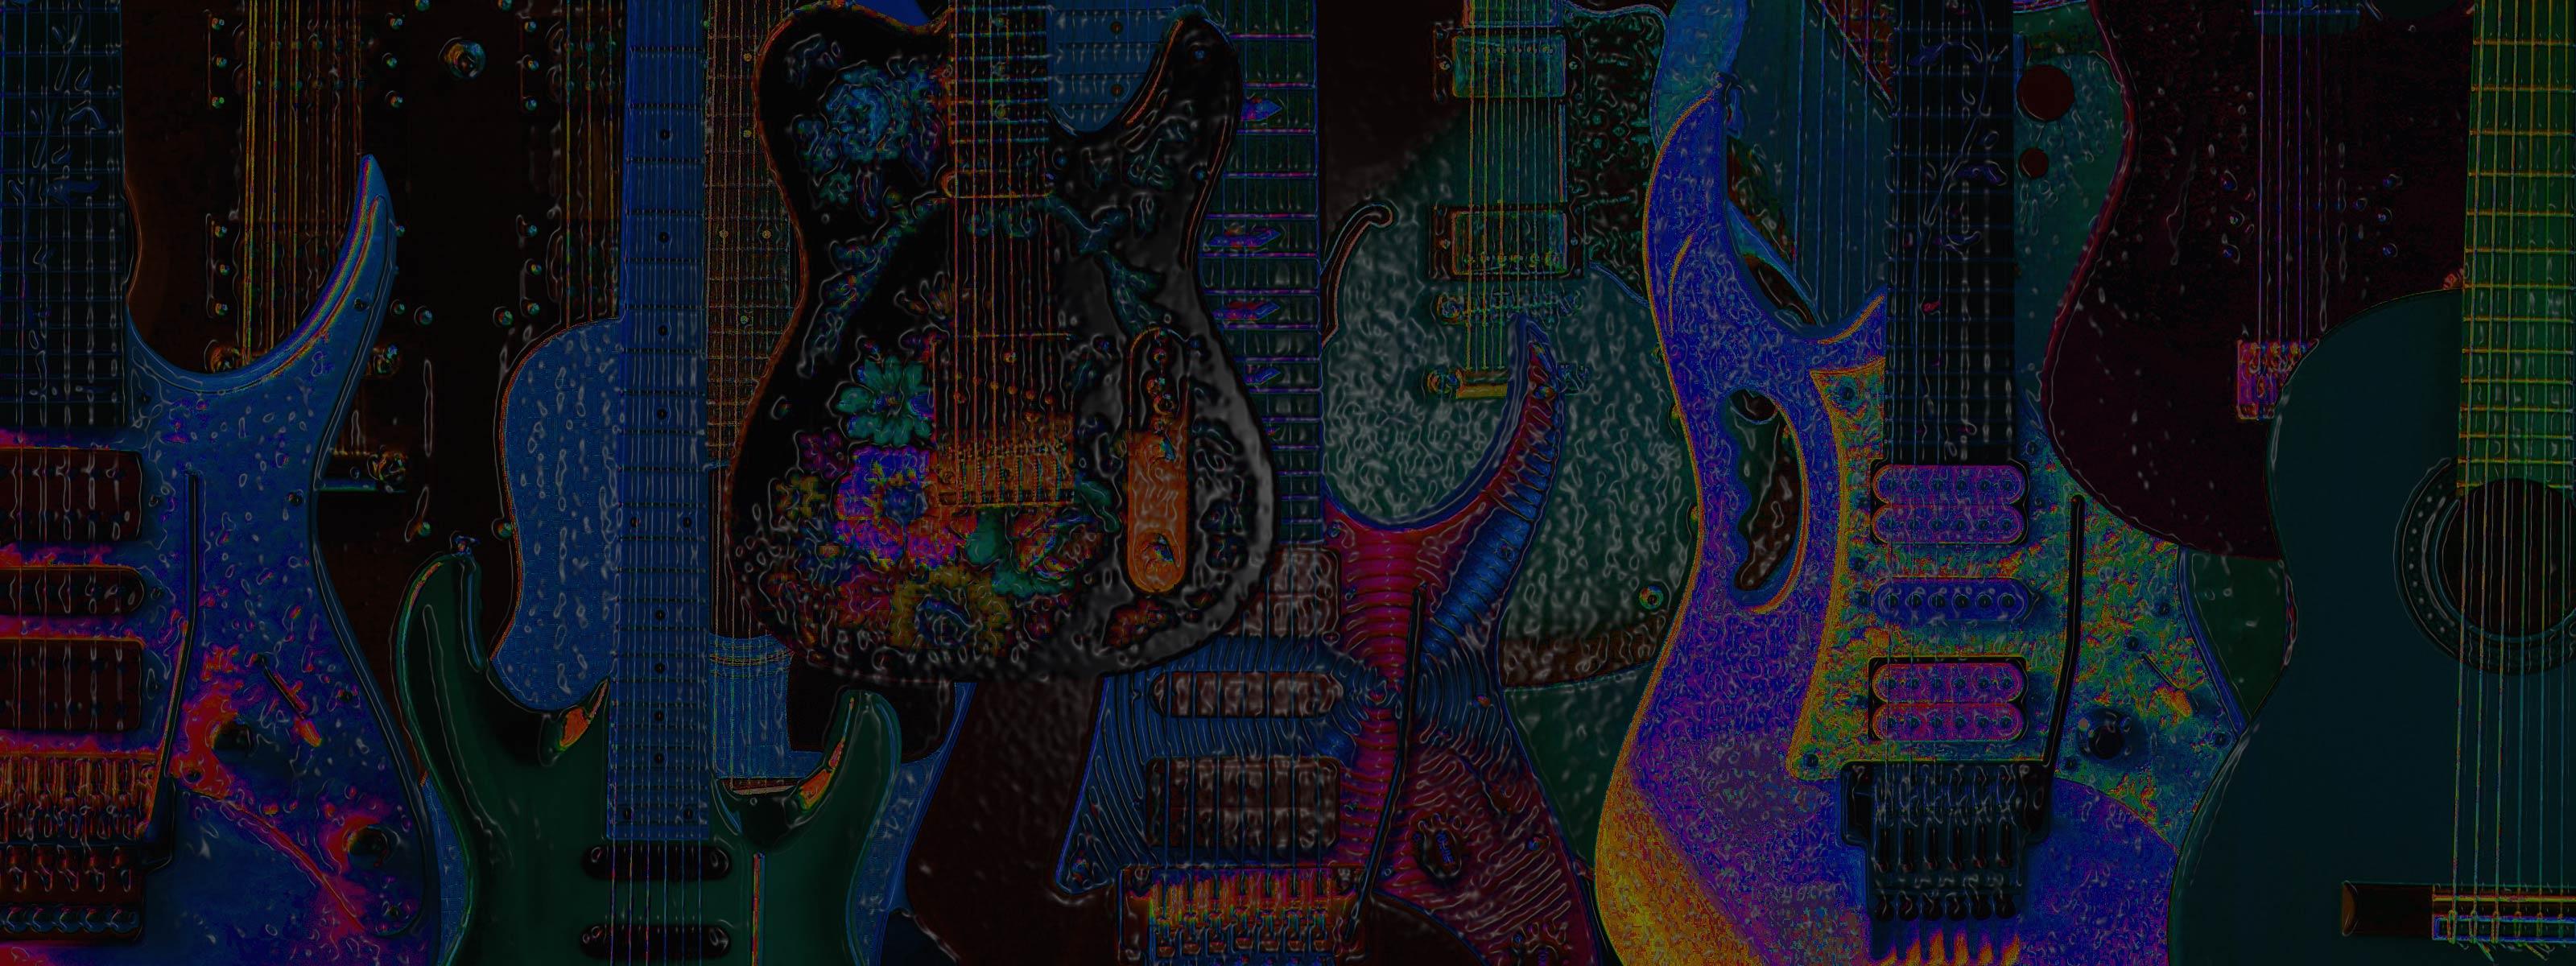 Dual monitor guitar wallpaper, from GCH Guitar Academy